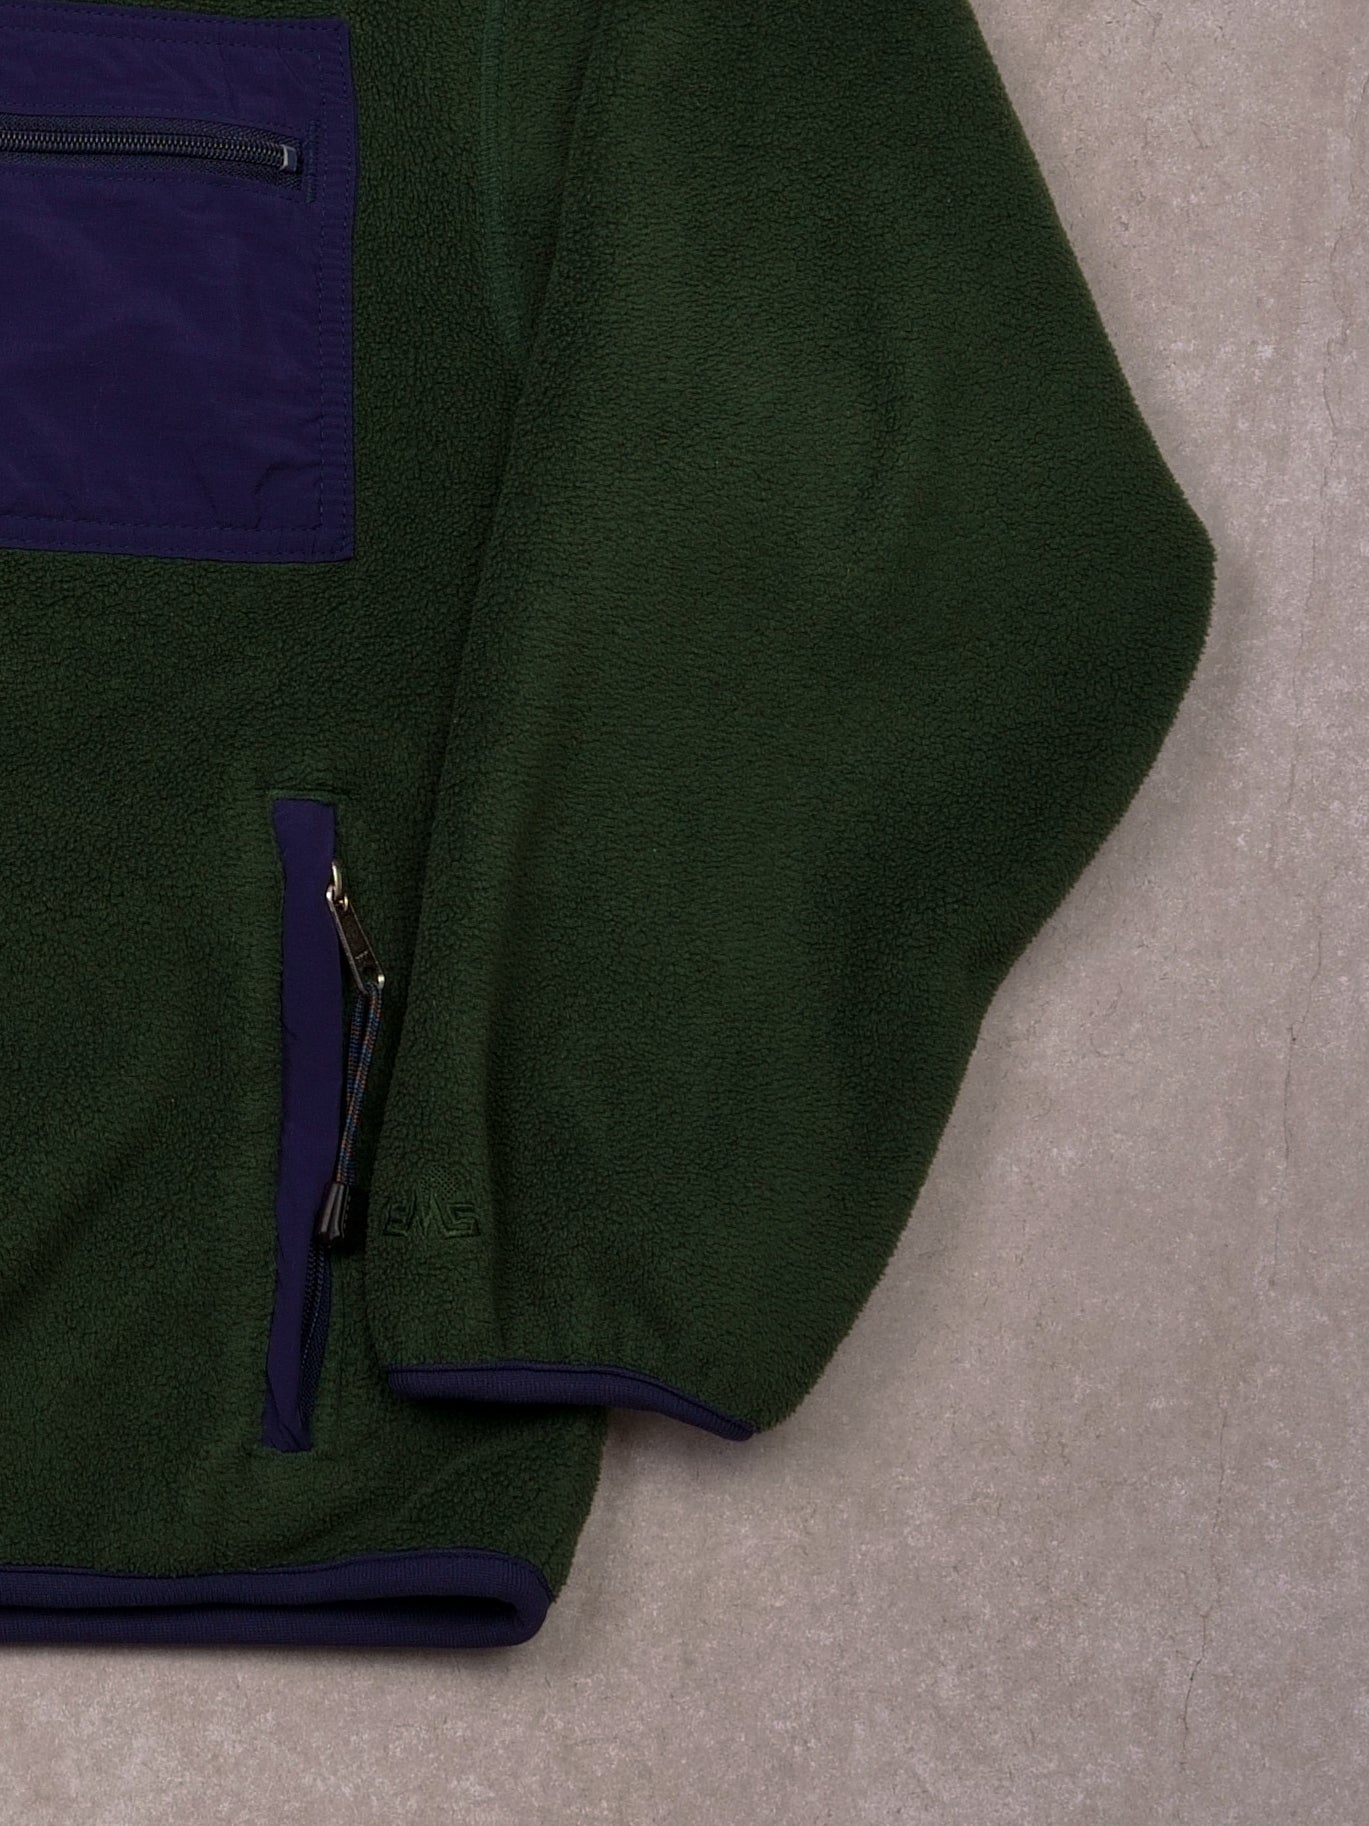 Vintage 90s Green and Navy Polartec Fleece Collared Zip Up (L)